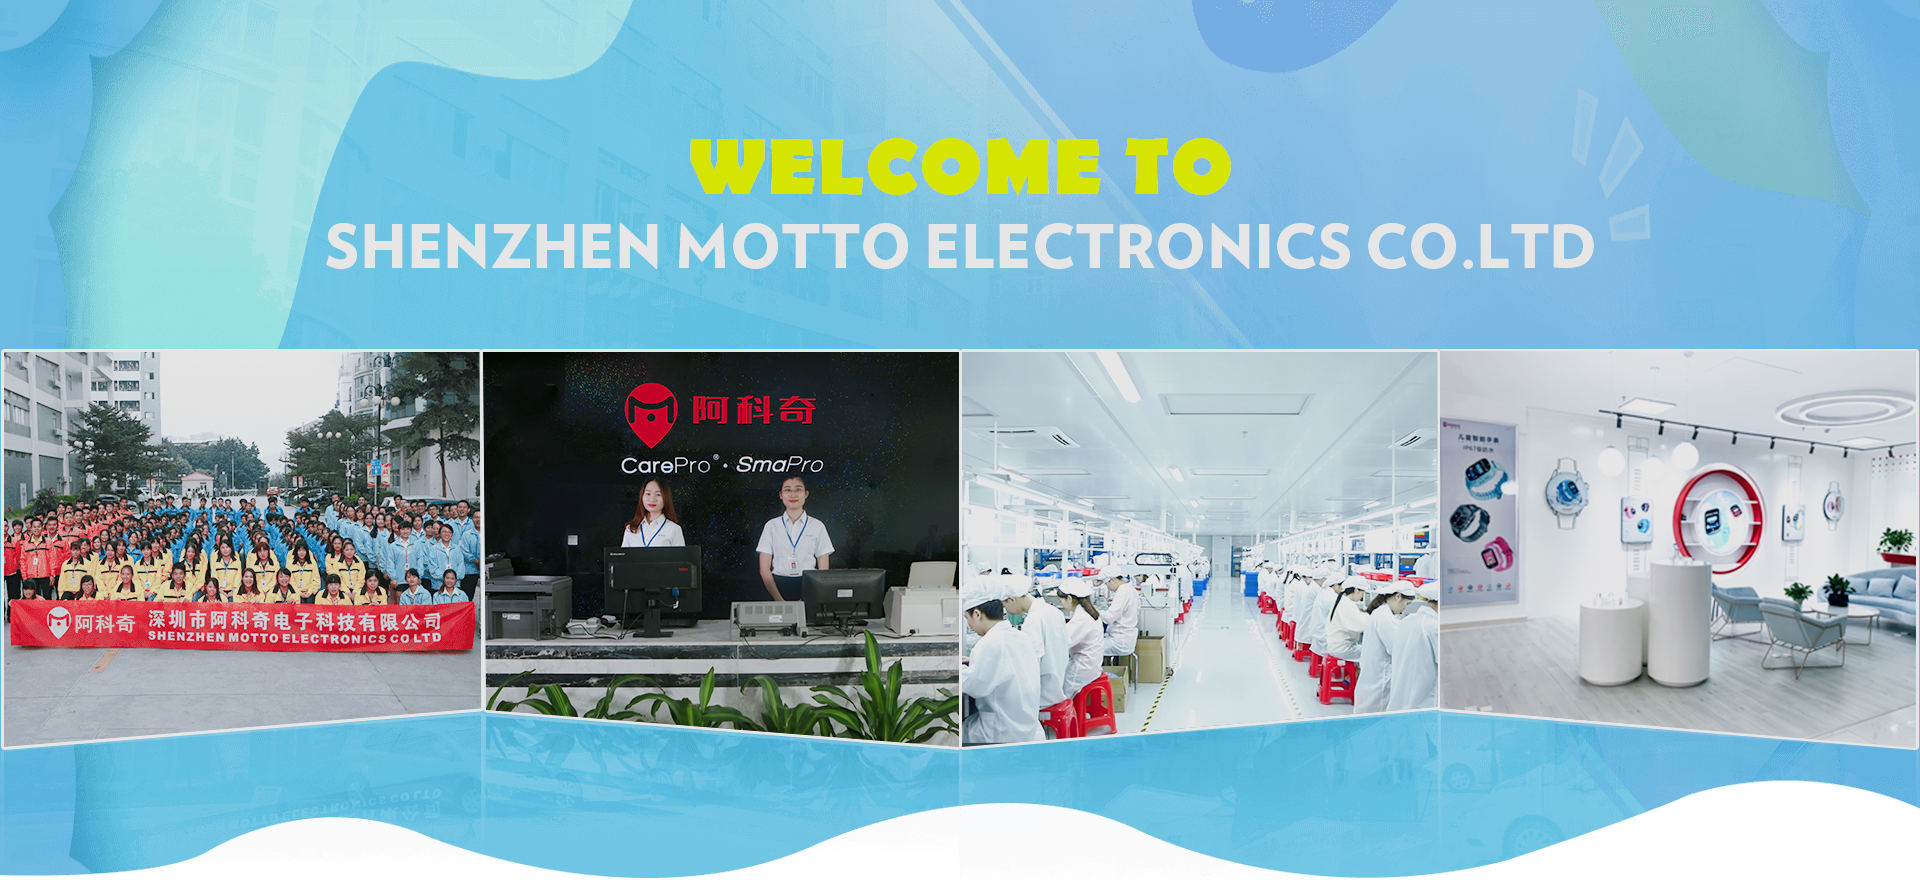 Shenzhen Motto Electronics Company